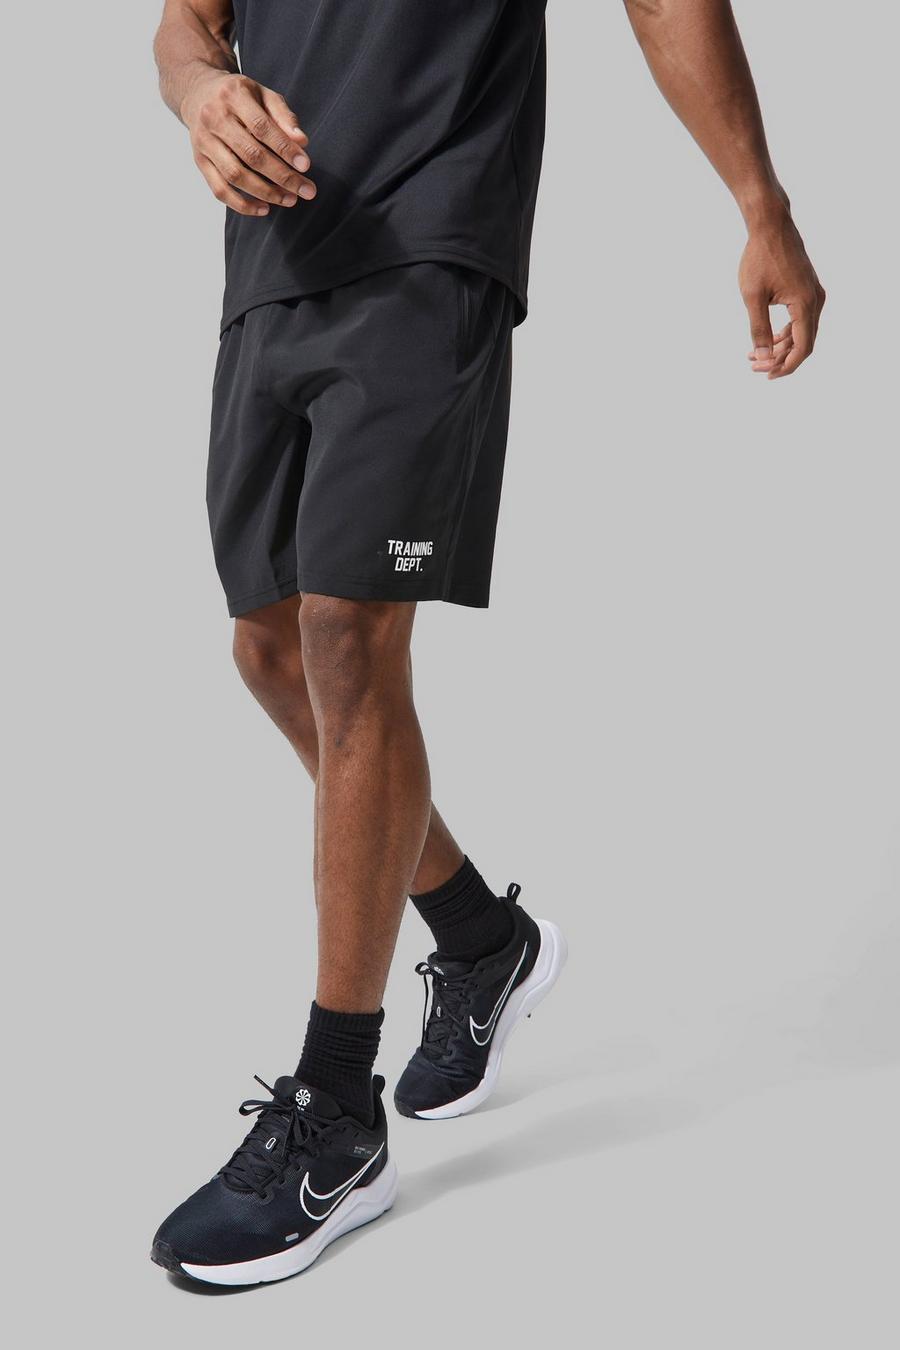 Pantalón corto MAN Active resistente Training Dept, Black image number 1